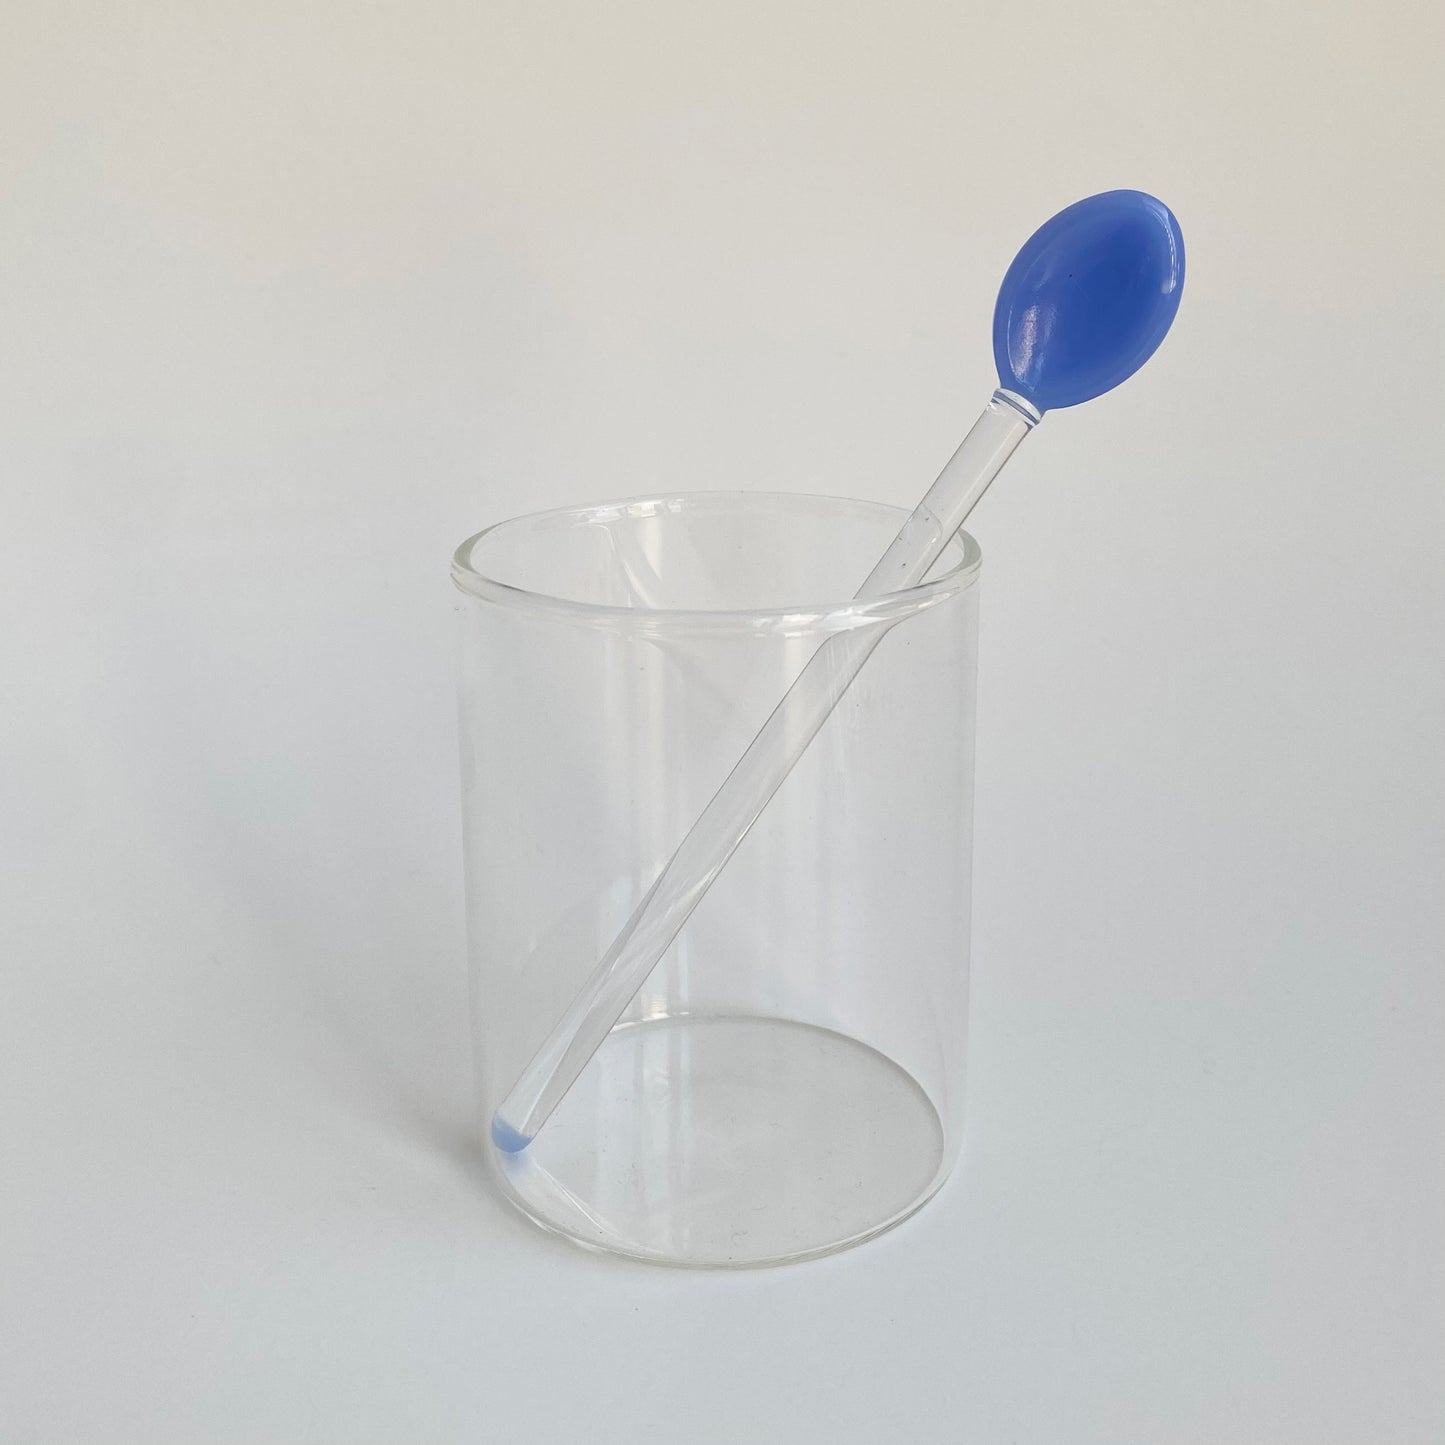 Glass Spoon & Coffee Stirrer in blue